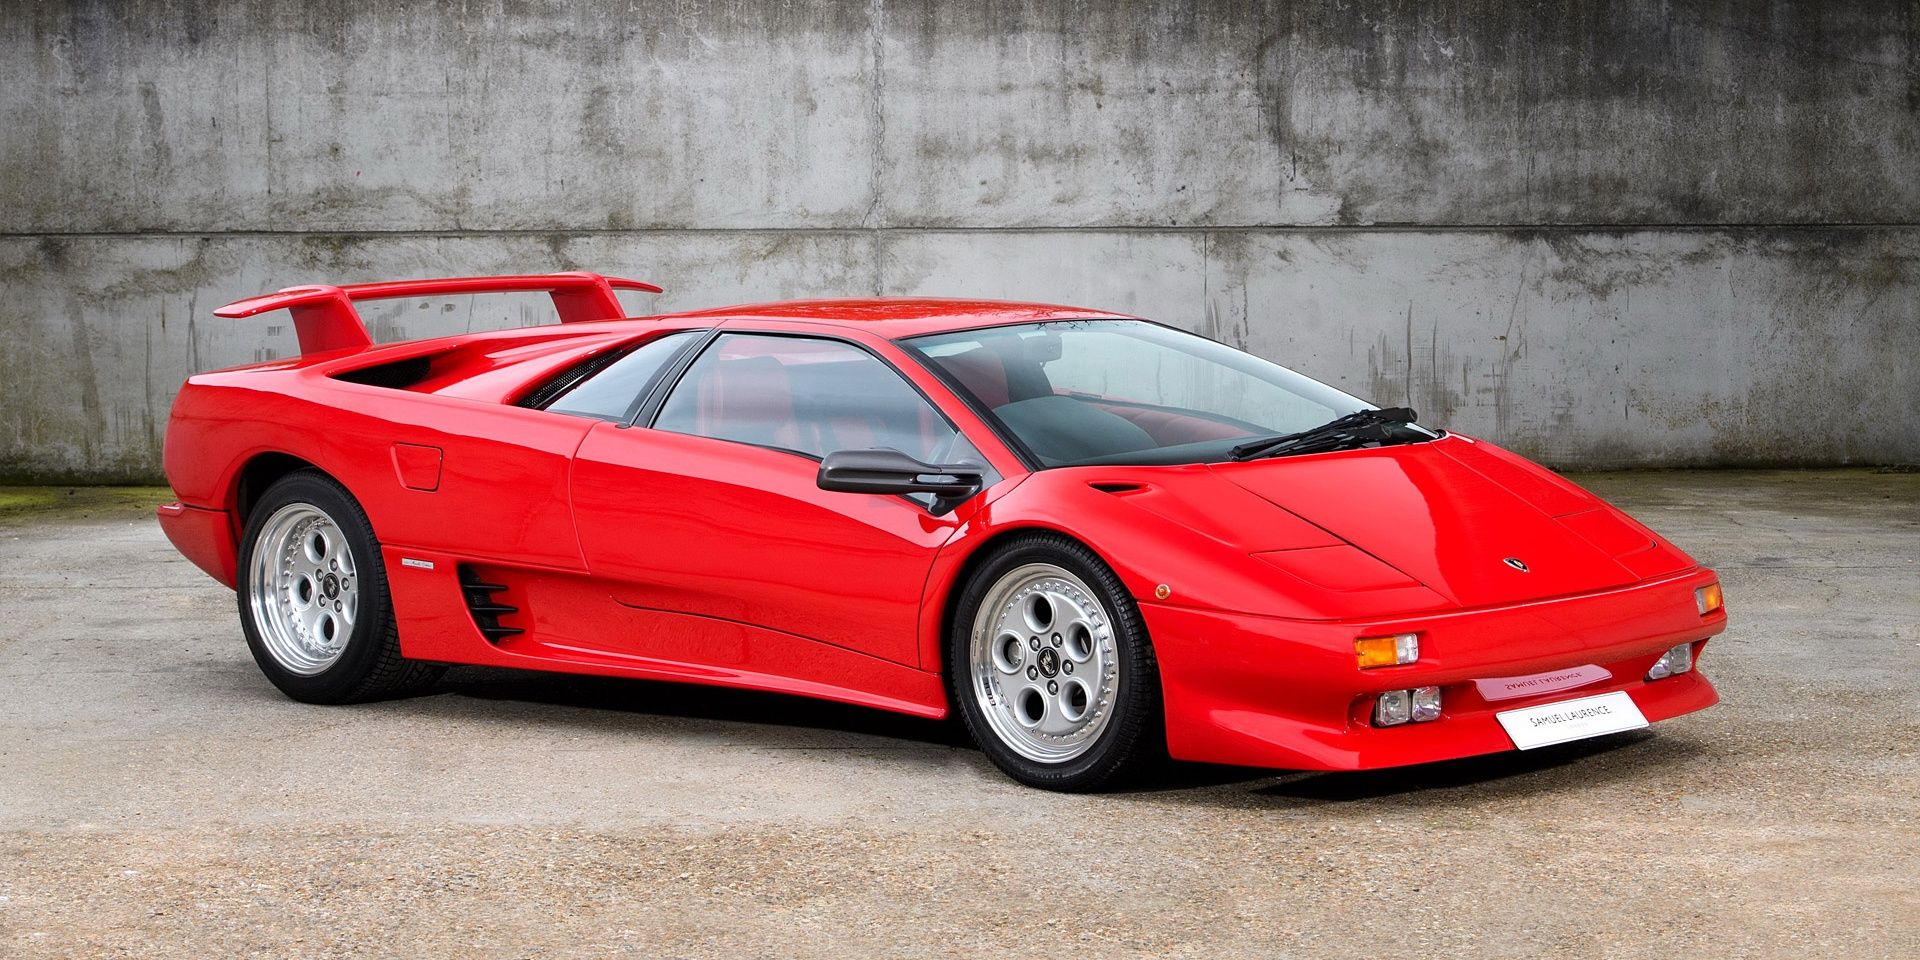 A parked picture of a splendid red 1990 Lamborghini Diablo